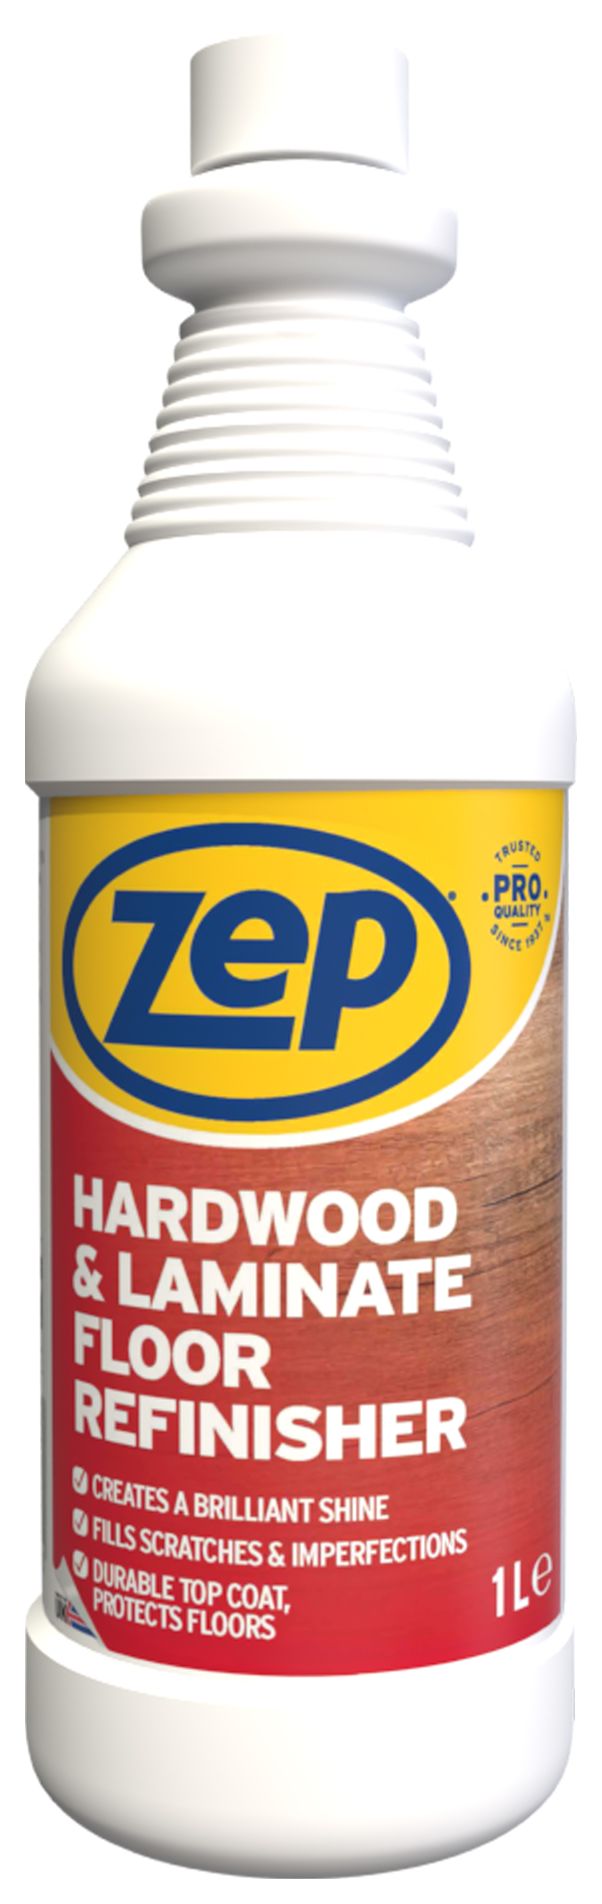 Image of Zep Hardwood & Laminate Floor Refinisher 1L